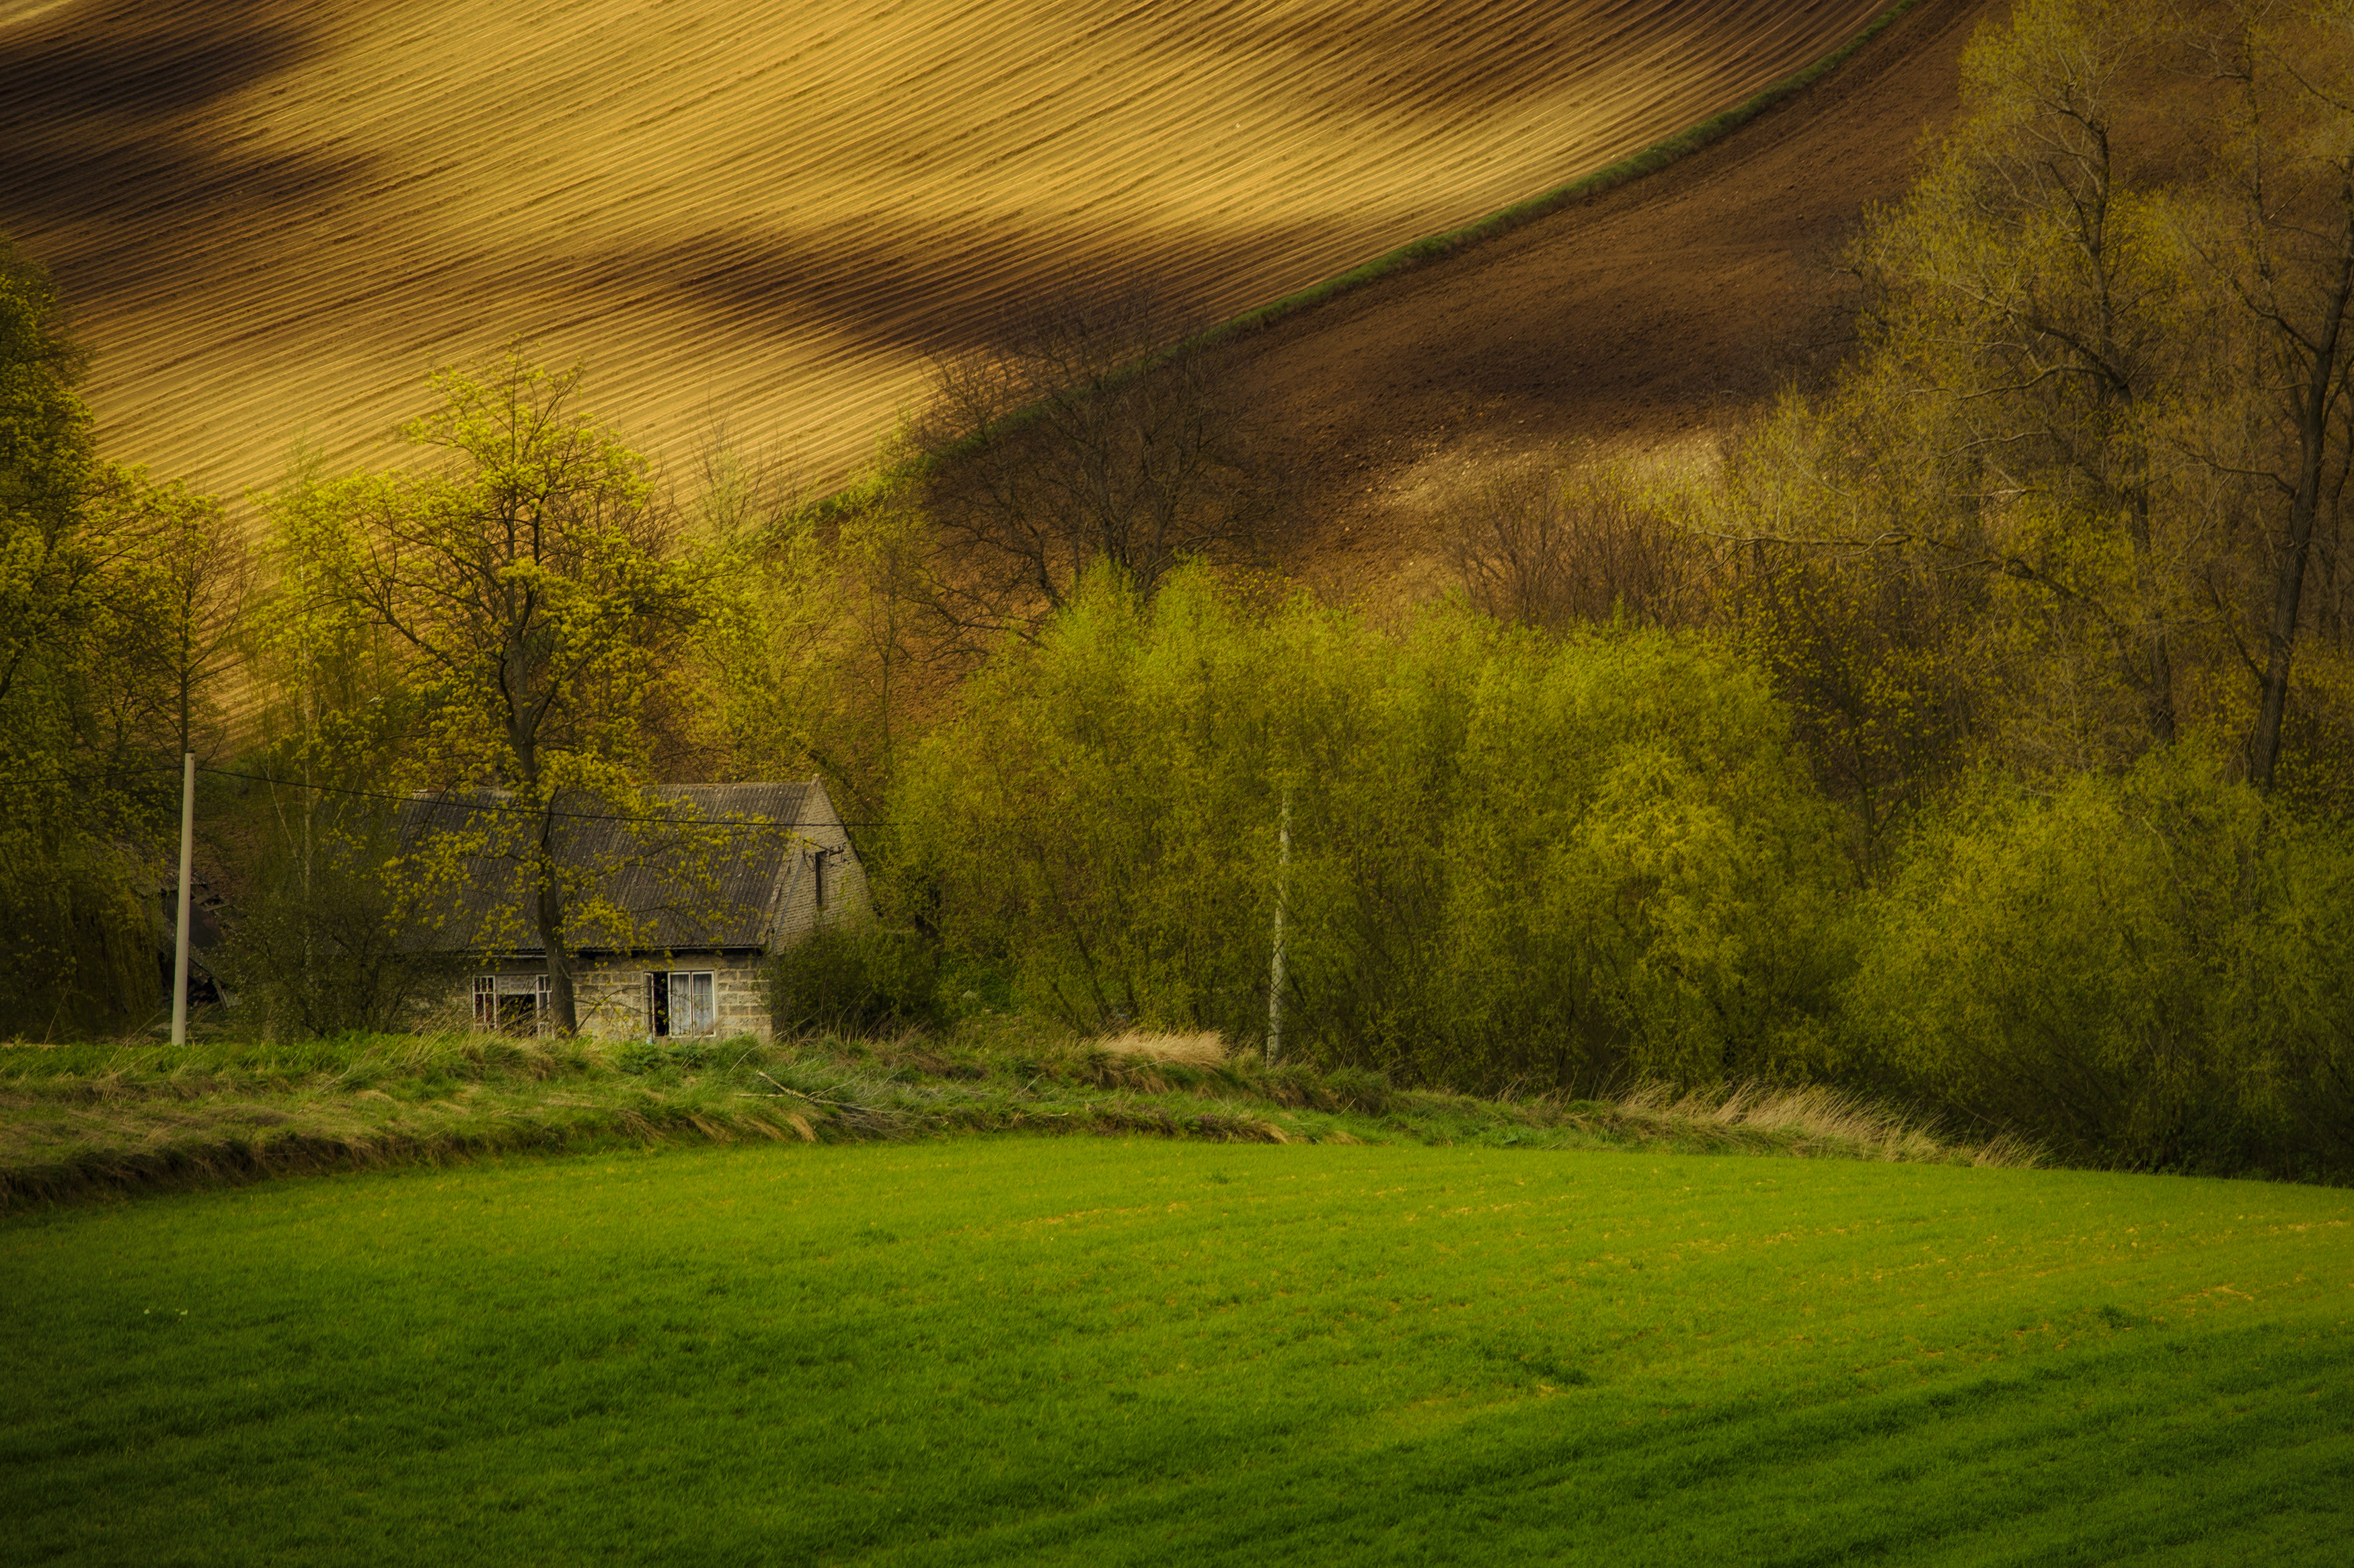 Tree, Nature, Grass, Day, Agriculture, Rural, Village, Field, Hill, Landscape, Ponidzie, Poland, Damian Cyfka